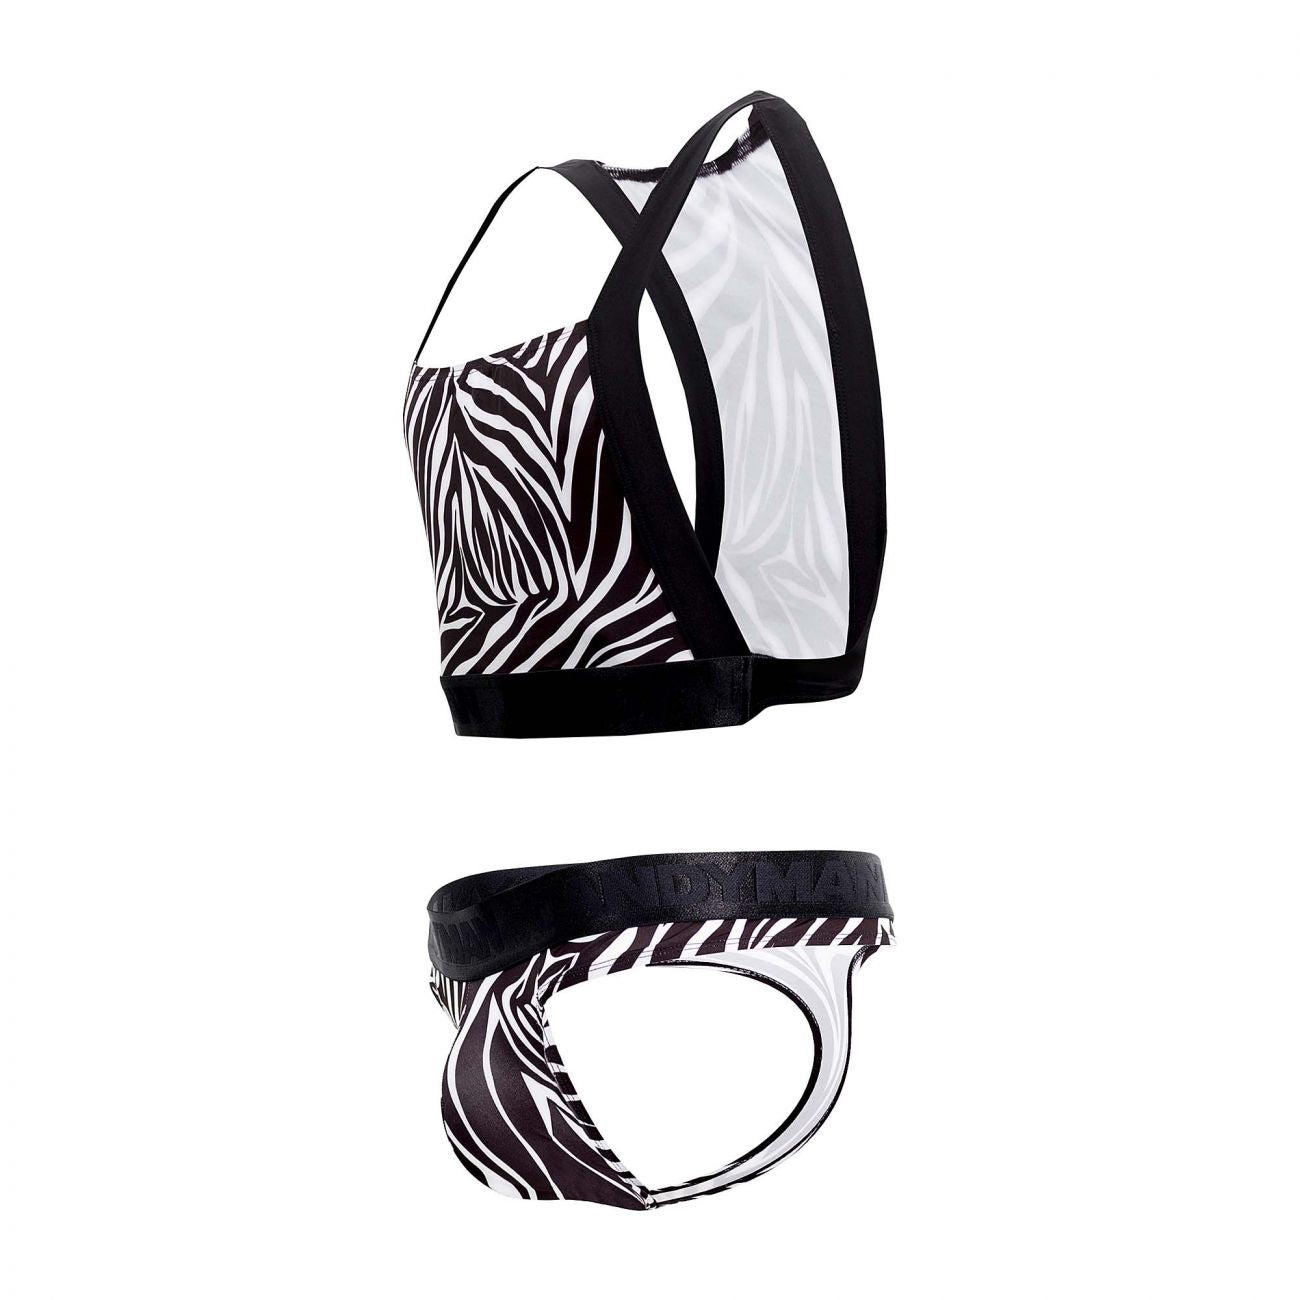 JCSTK - CandyMan 99524 Printed Top and Thong Set Black Zebra